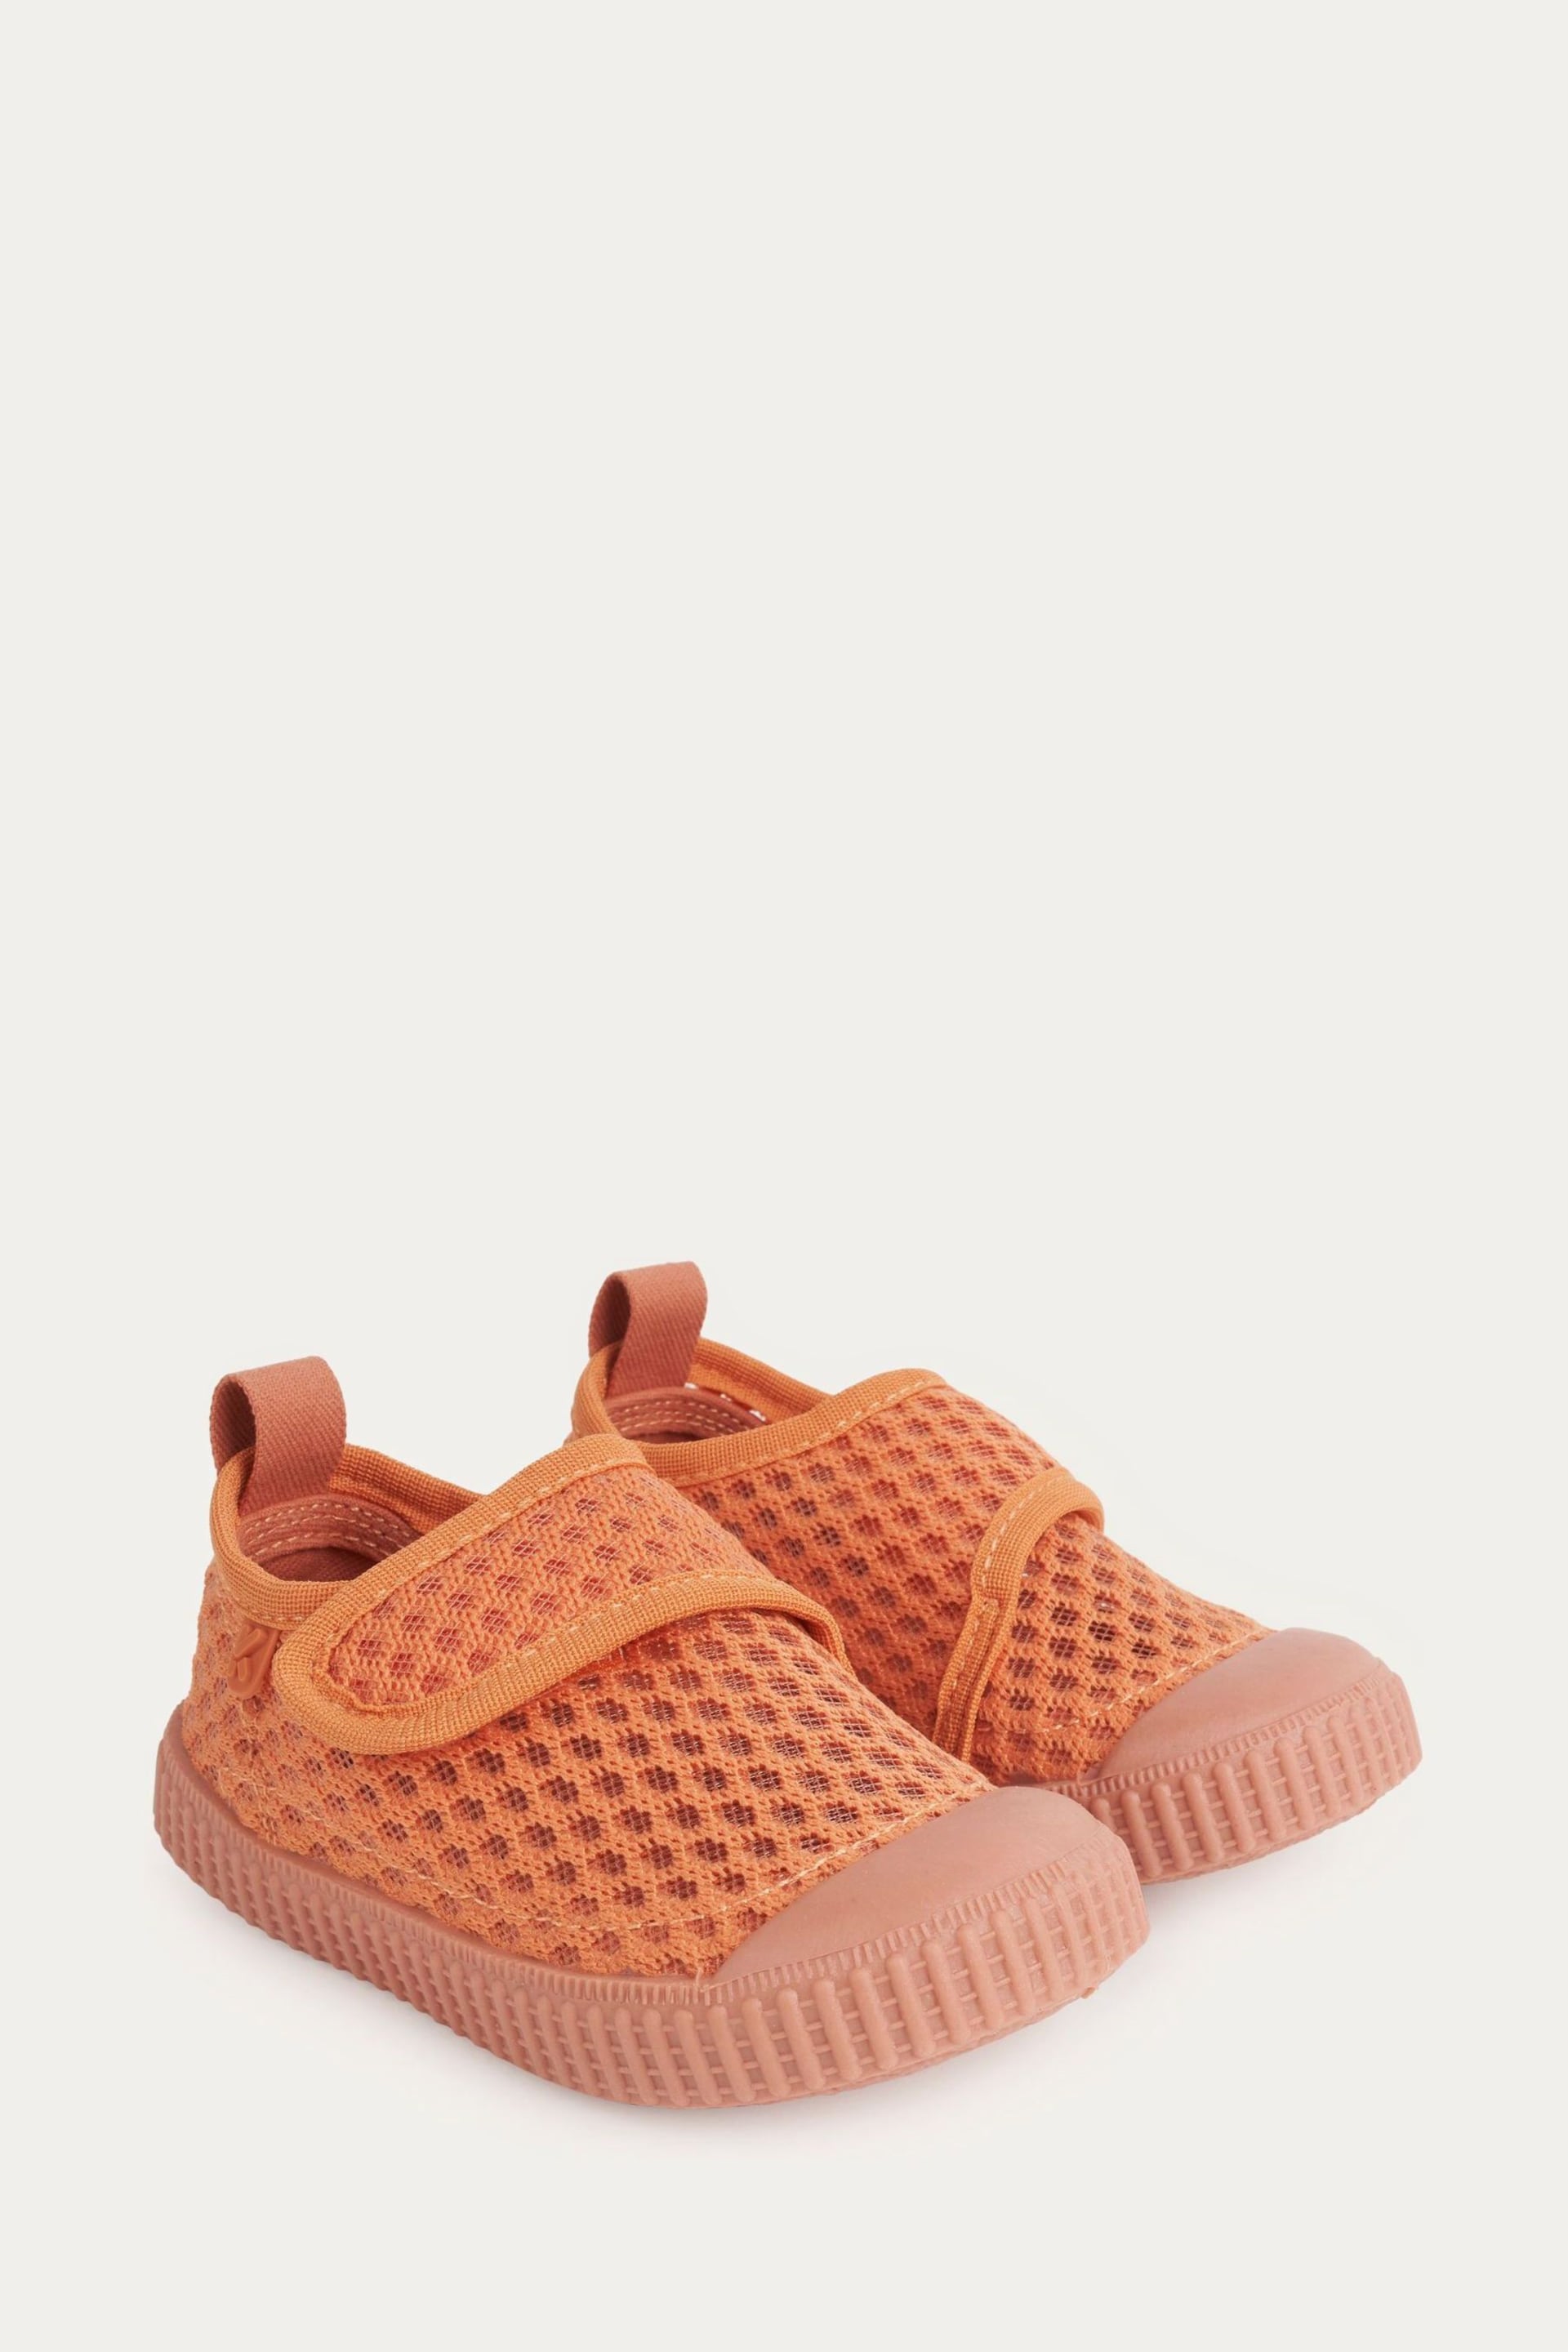 KIDLY Orange Mesh Swim Shoes - Image 1 of 4